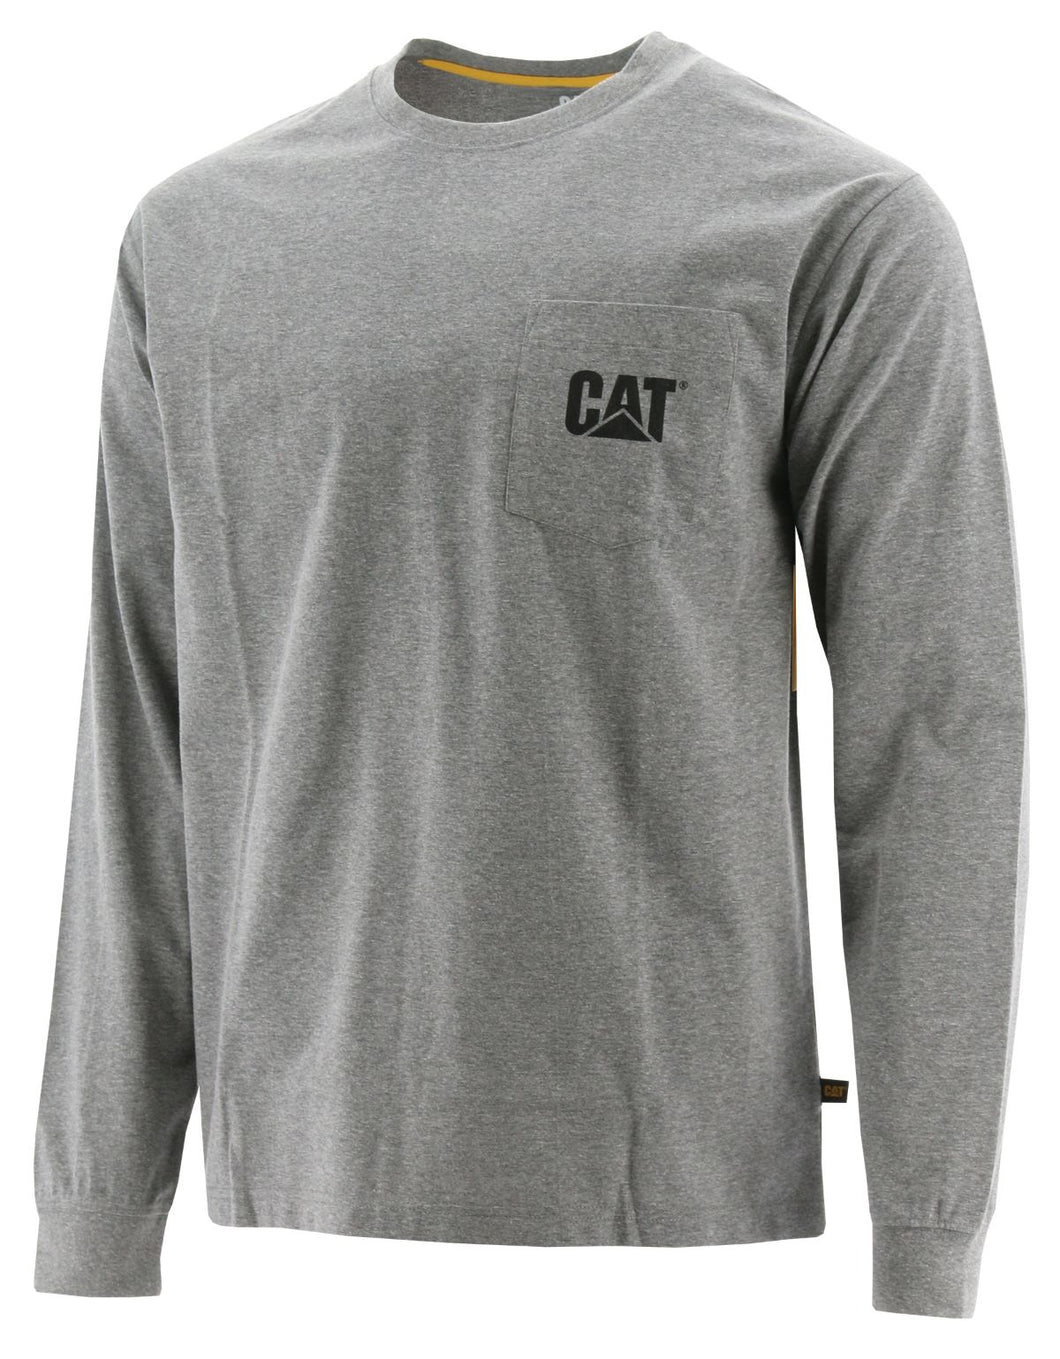 'Caterpillar' Men's Trademark Pocket T-Shirt - Dark Heather Grey